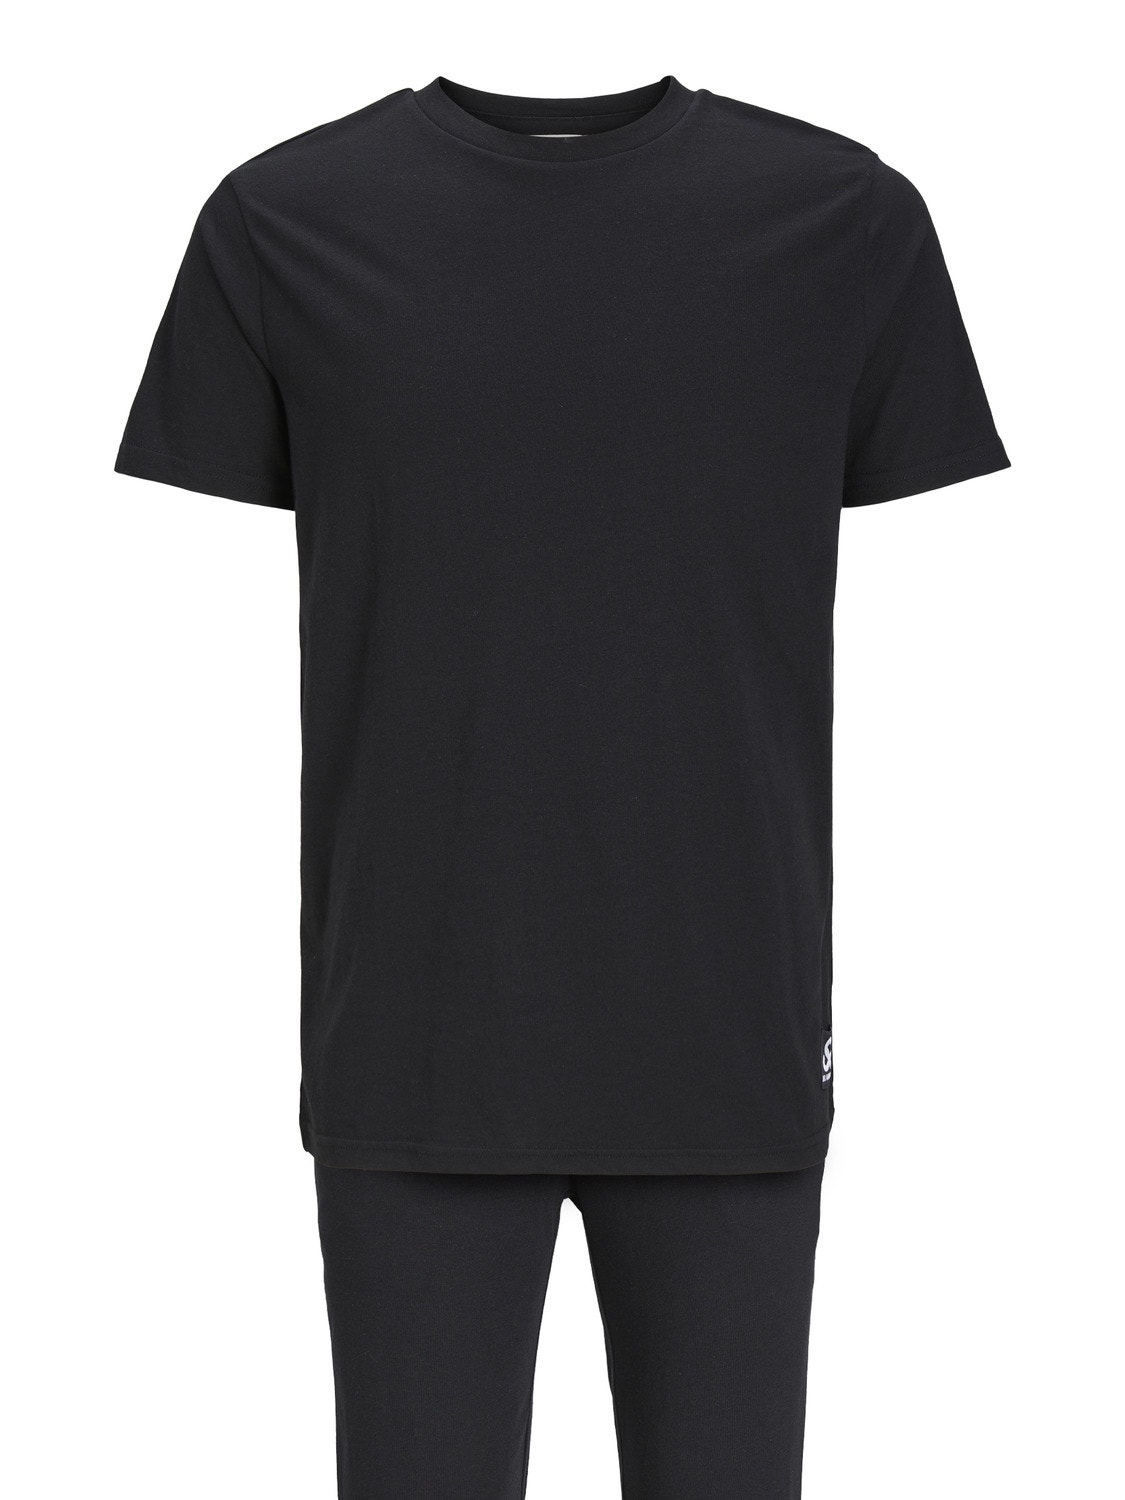 Jack & Jones Plain Crew neck Loungewear set -Black - 12245898